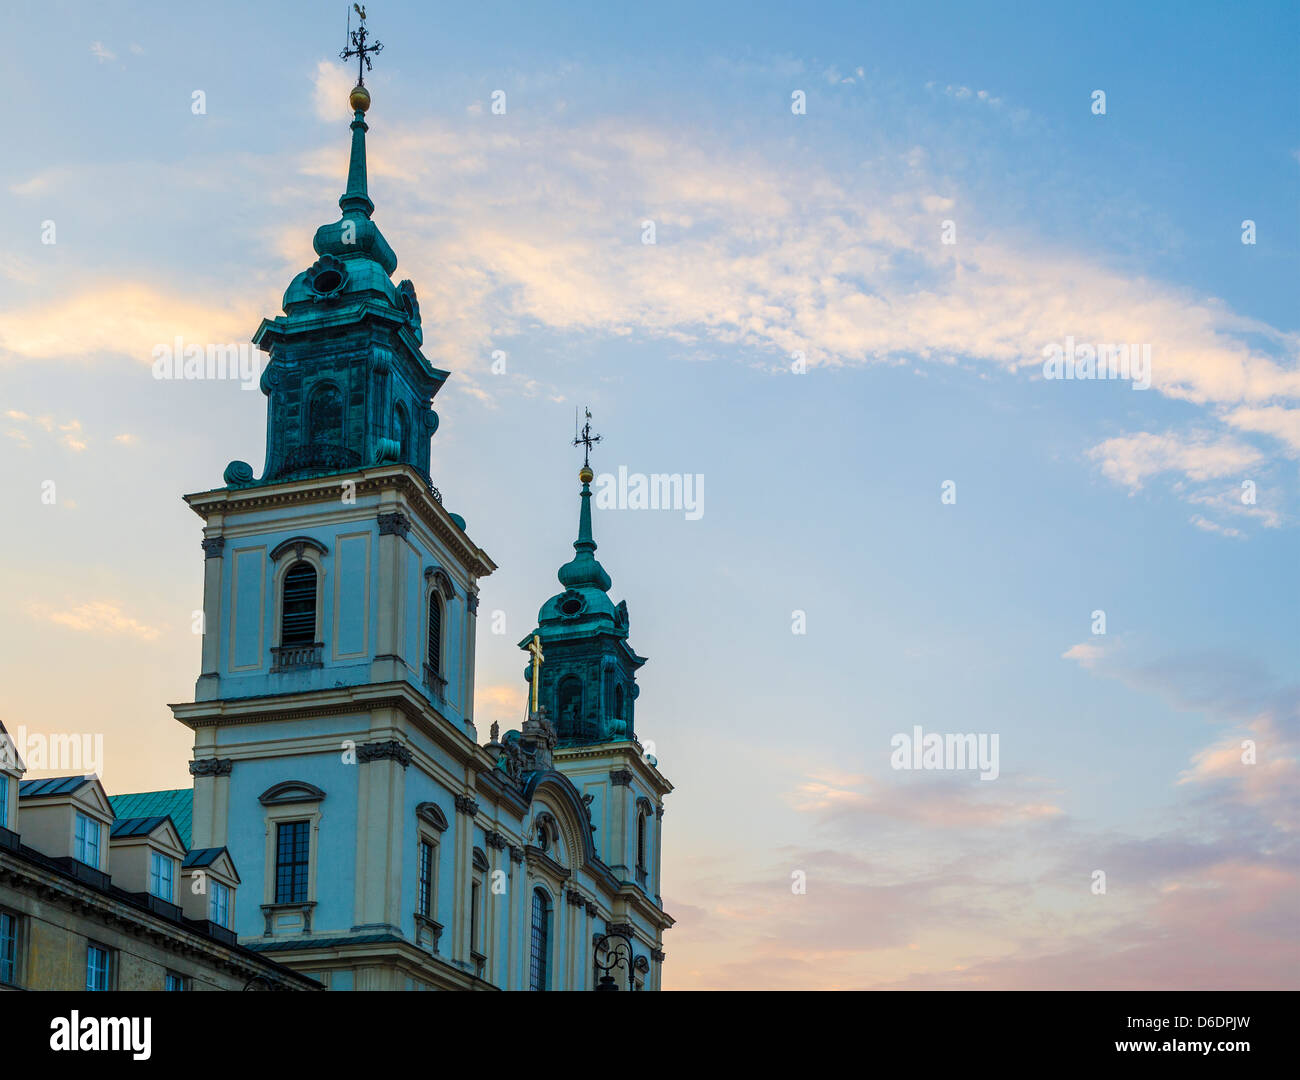 The Church of the Holy Cross, Kościół św. Krzyża, at sunset in Warsaw, Poland Stock Photo